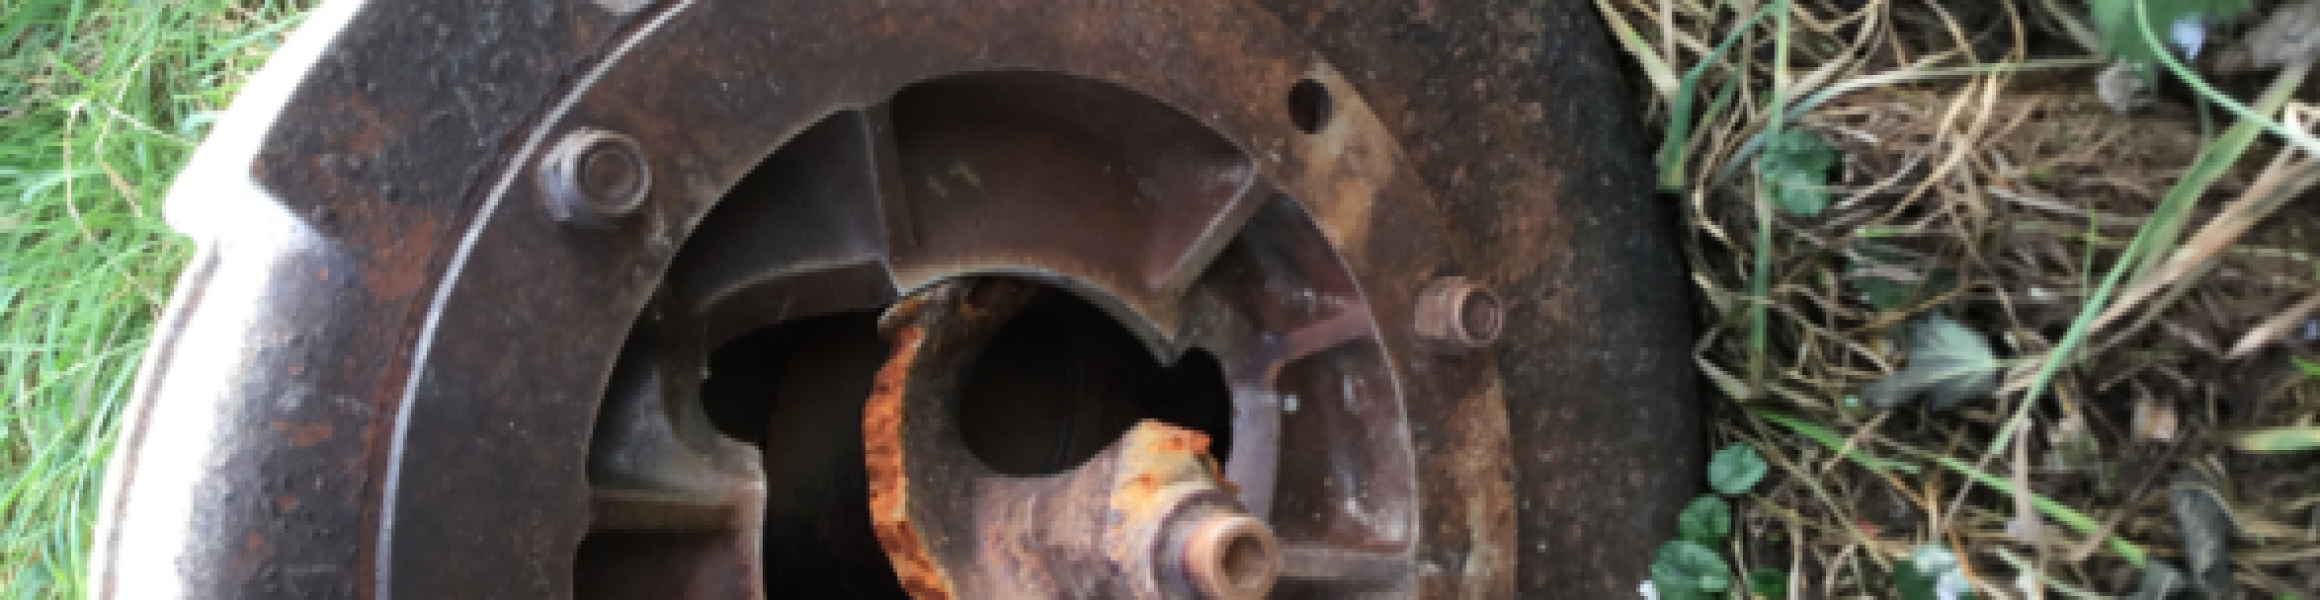 damaged-pump - Pipefix